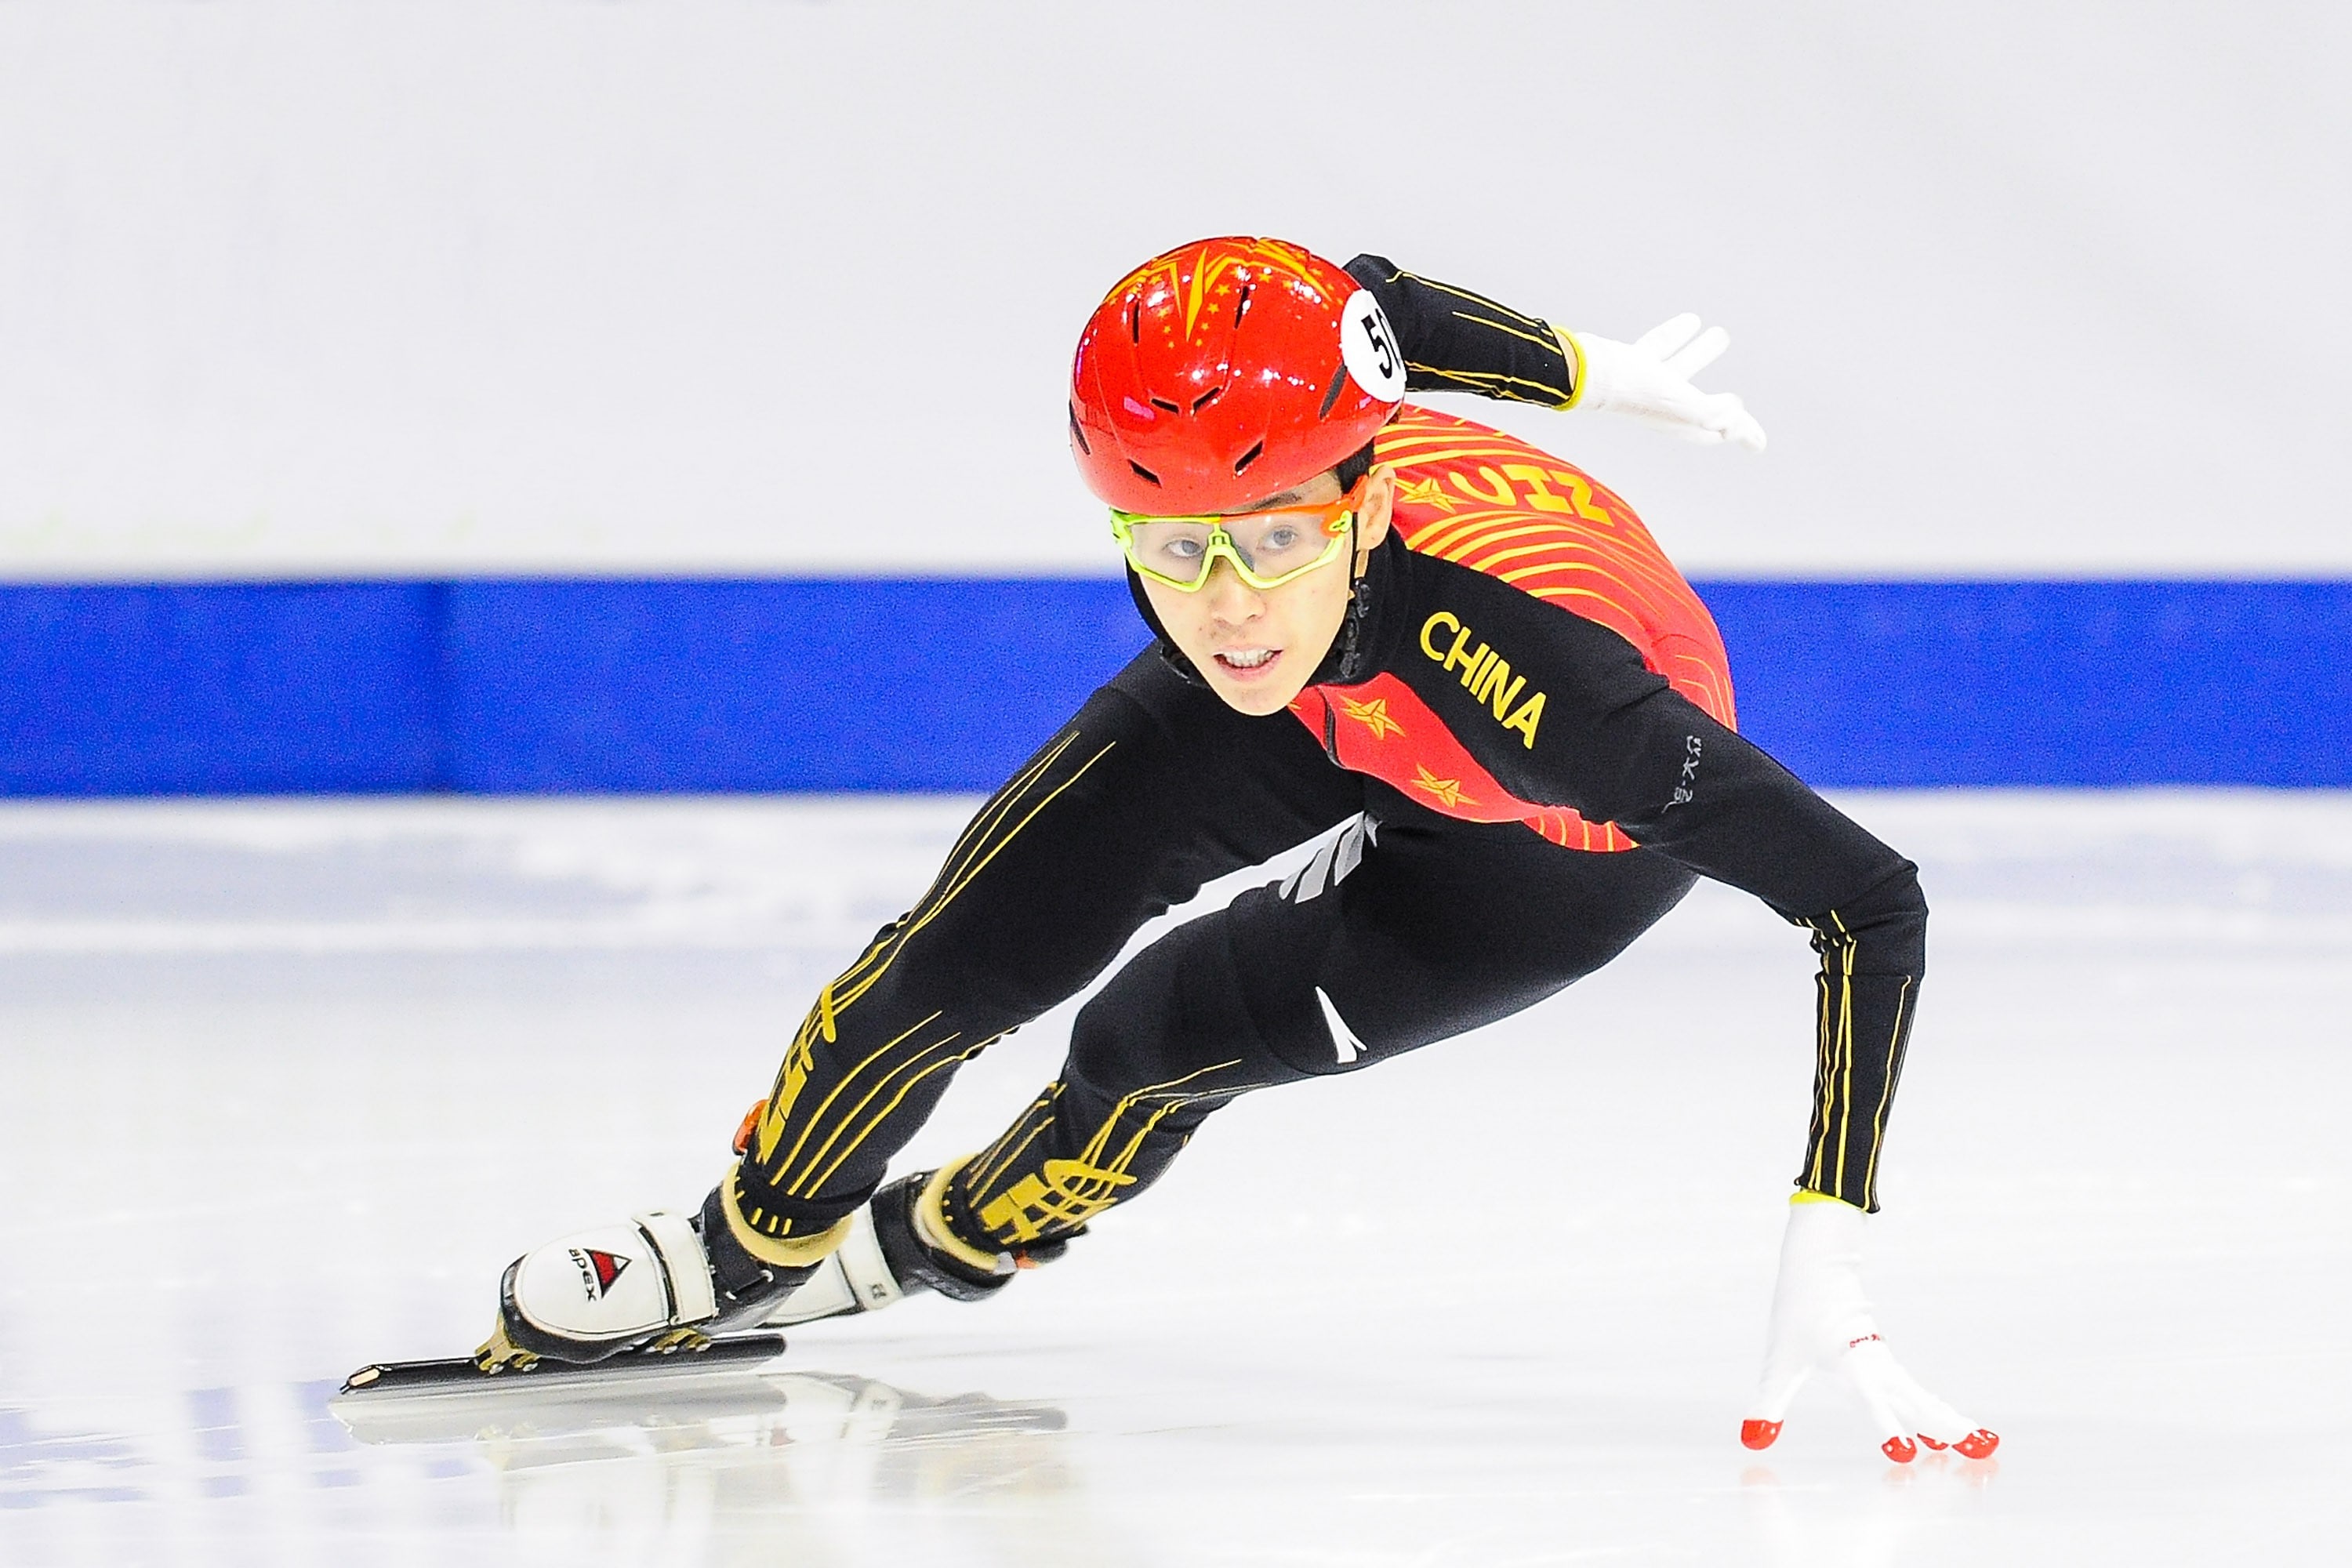 Der chinesische Eisschnellläufer Fan Kexin gewann in Peking zwei Medaillen